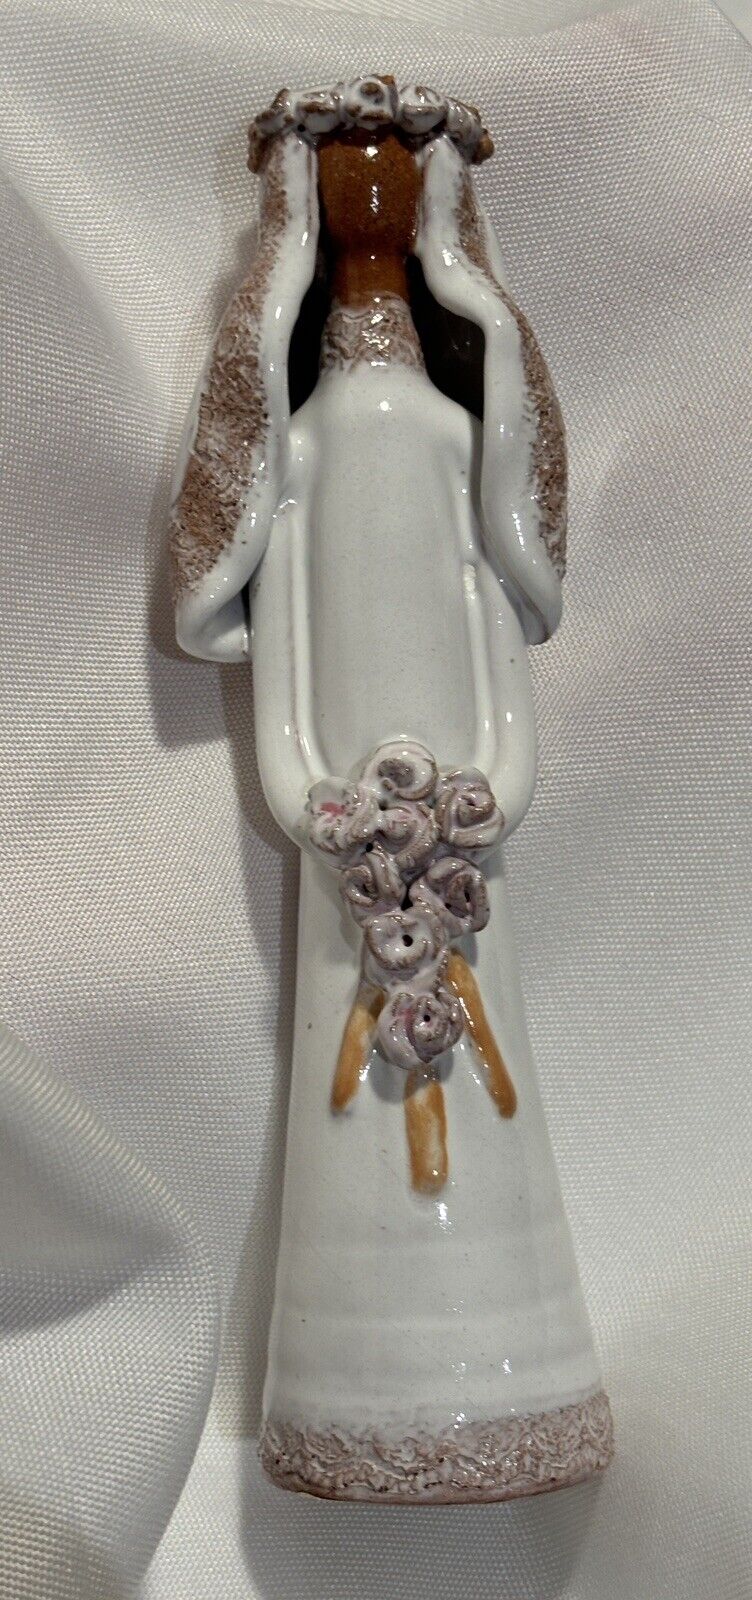 Artesania Lime Faceless Wedding Bride Doll Figurine Dominican Republic 6.25”